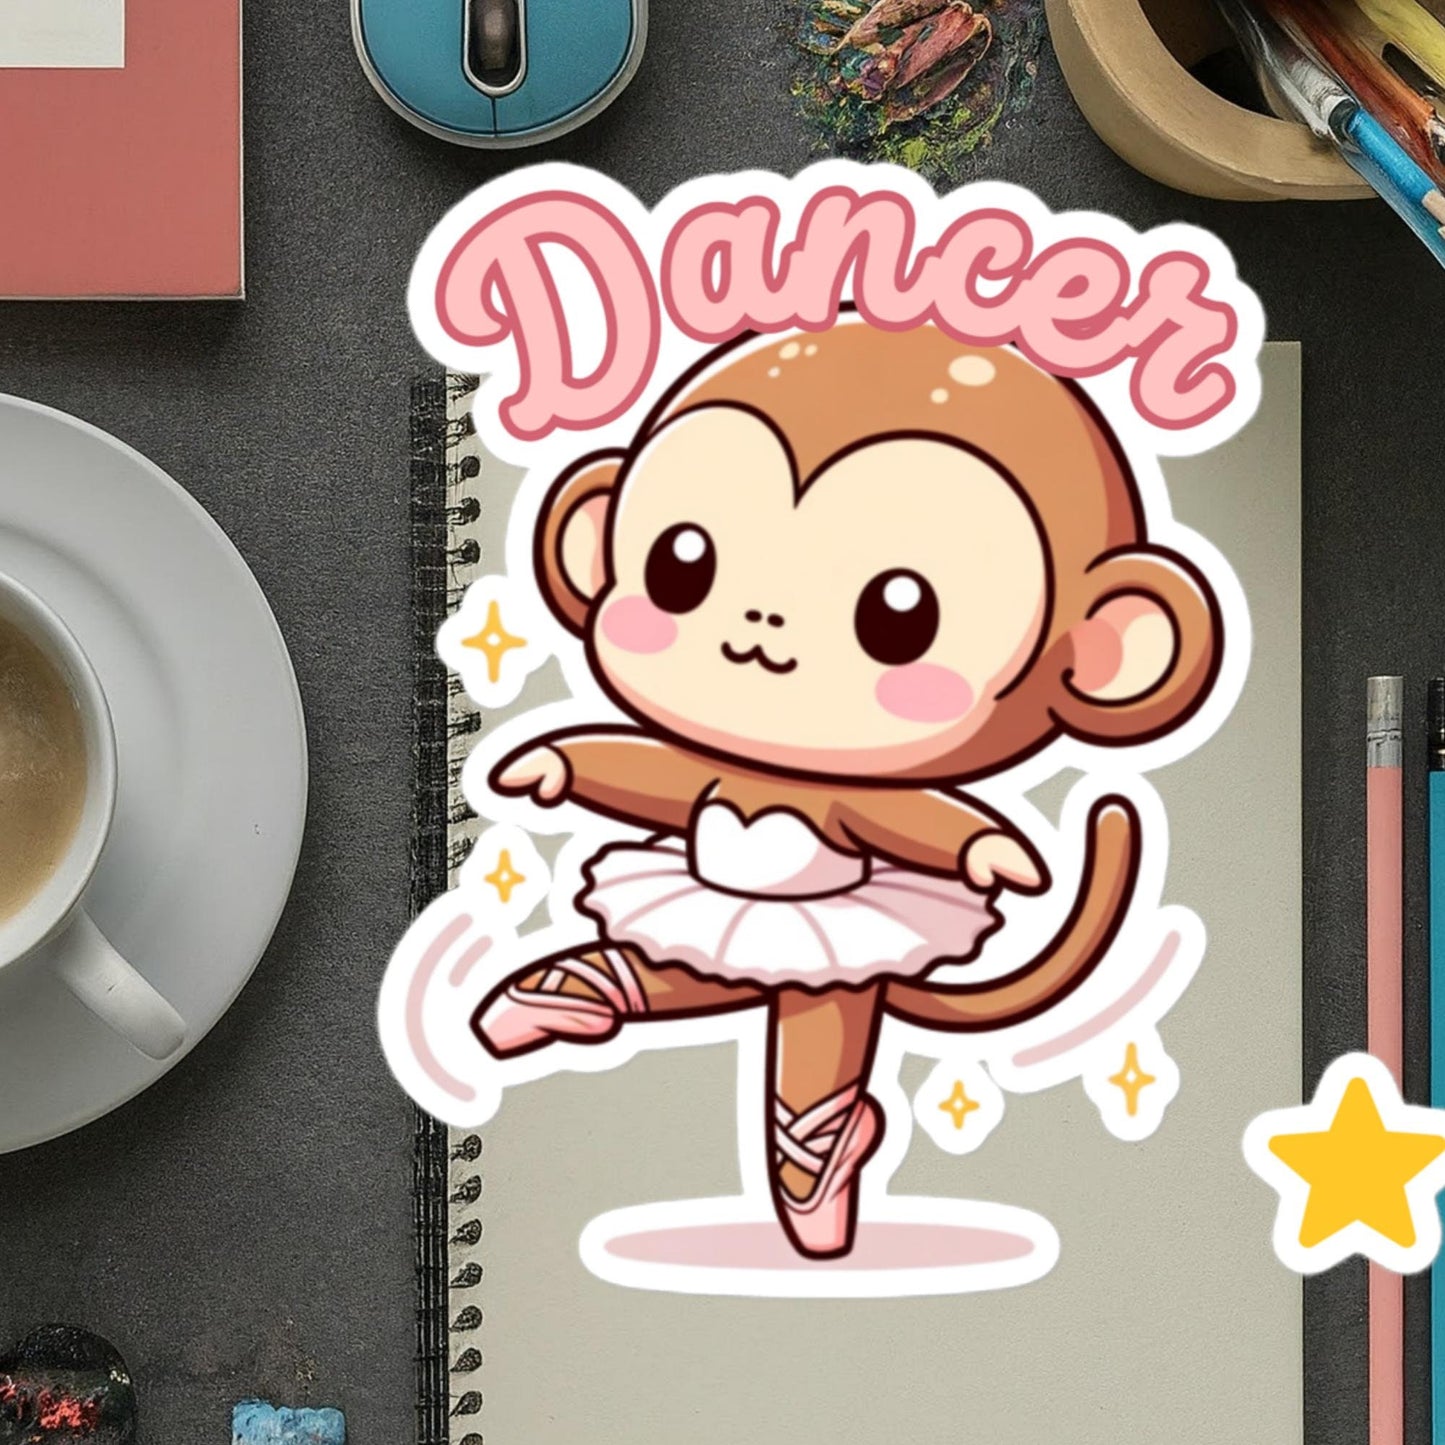 Dancer Monkey sticker Bubble-free stickers ballet dancer gifts teacher gifts